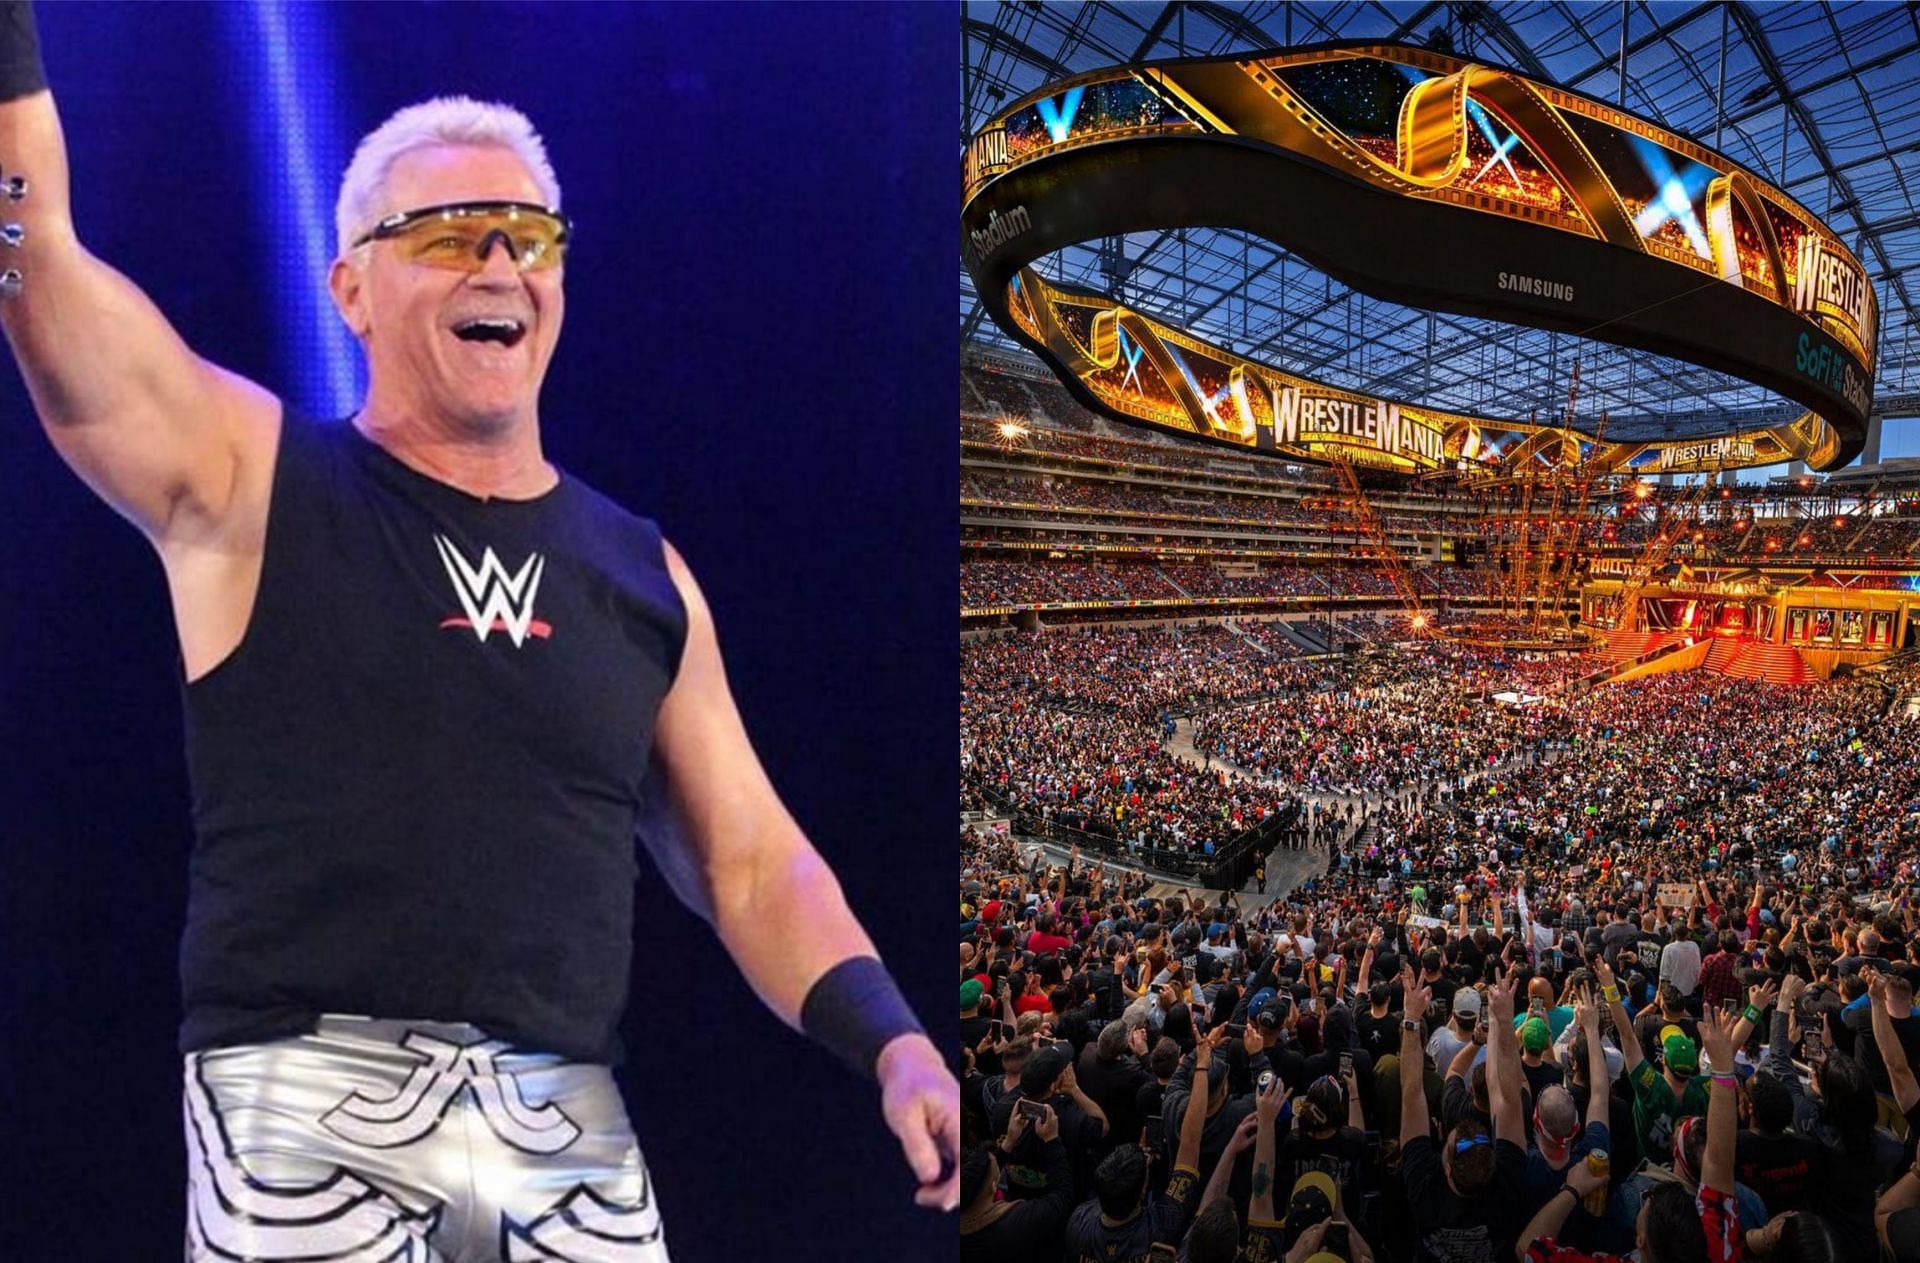 Jeff Jarrett comments on the WrestleMania 39 main event.